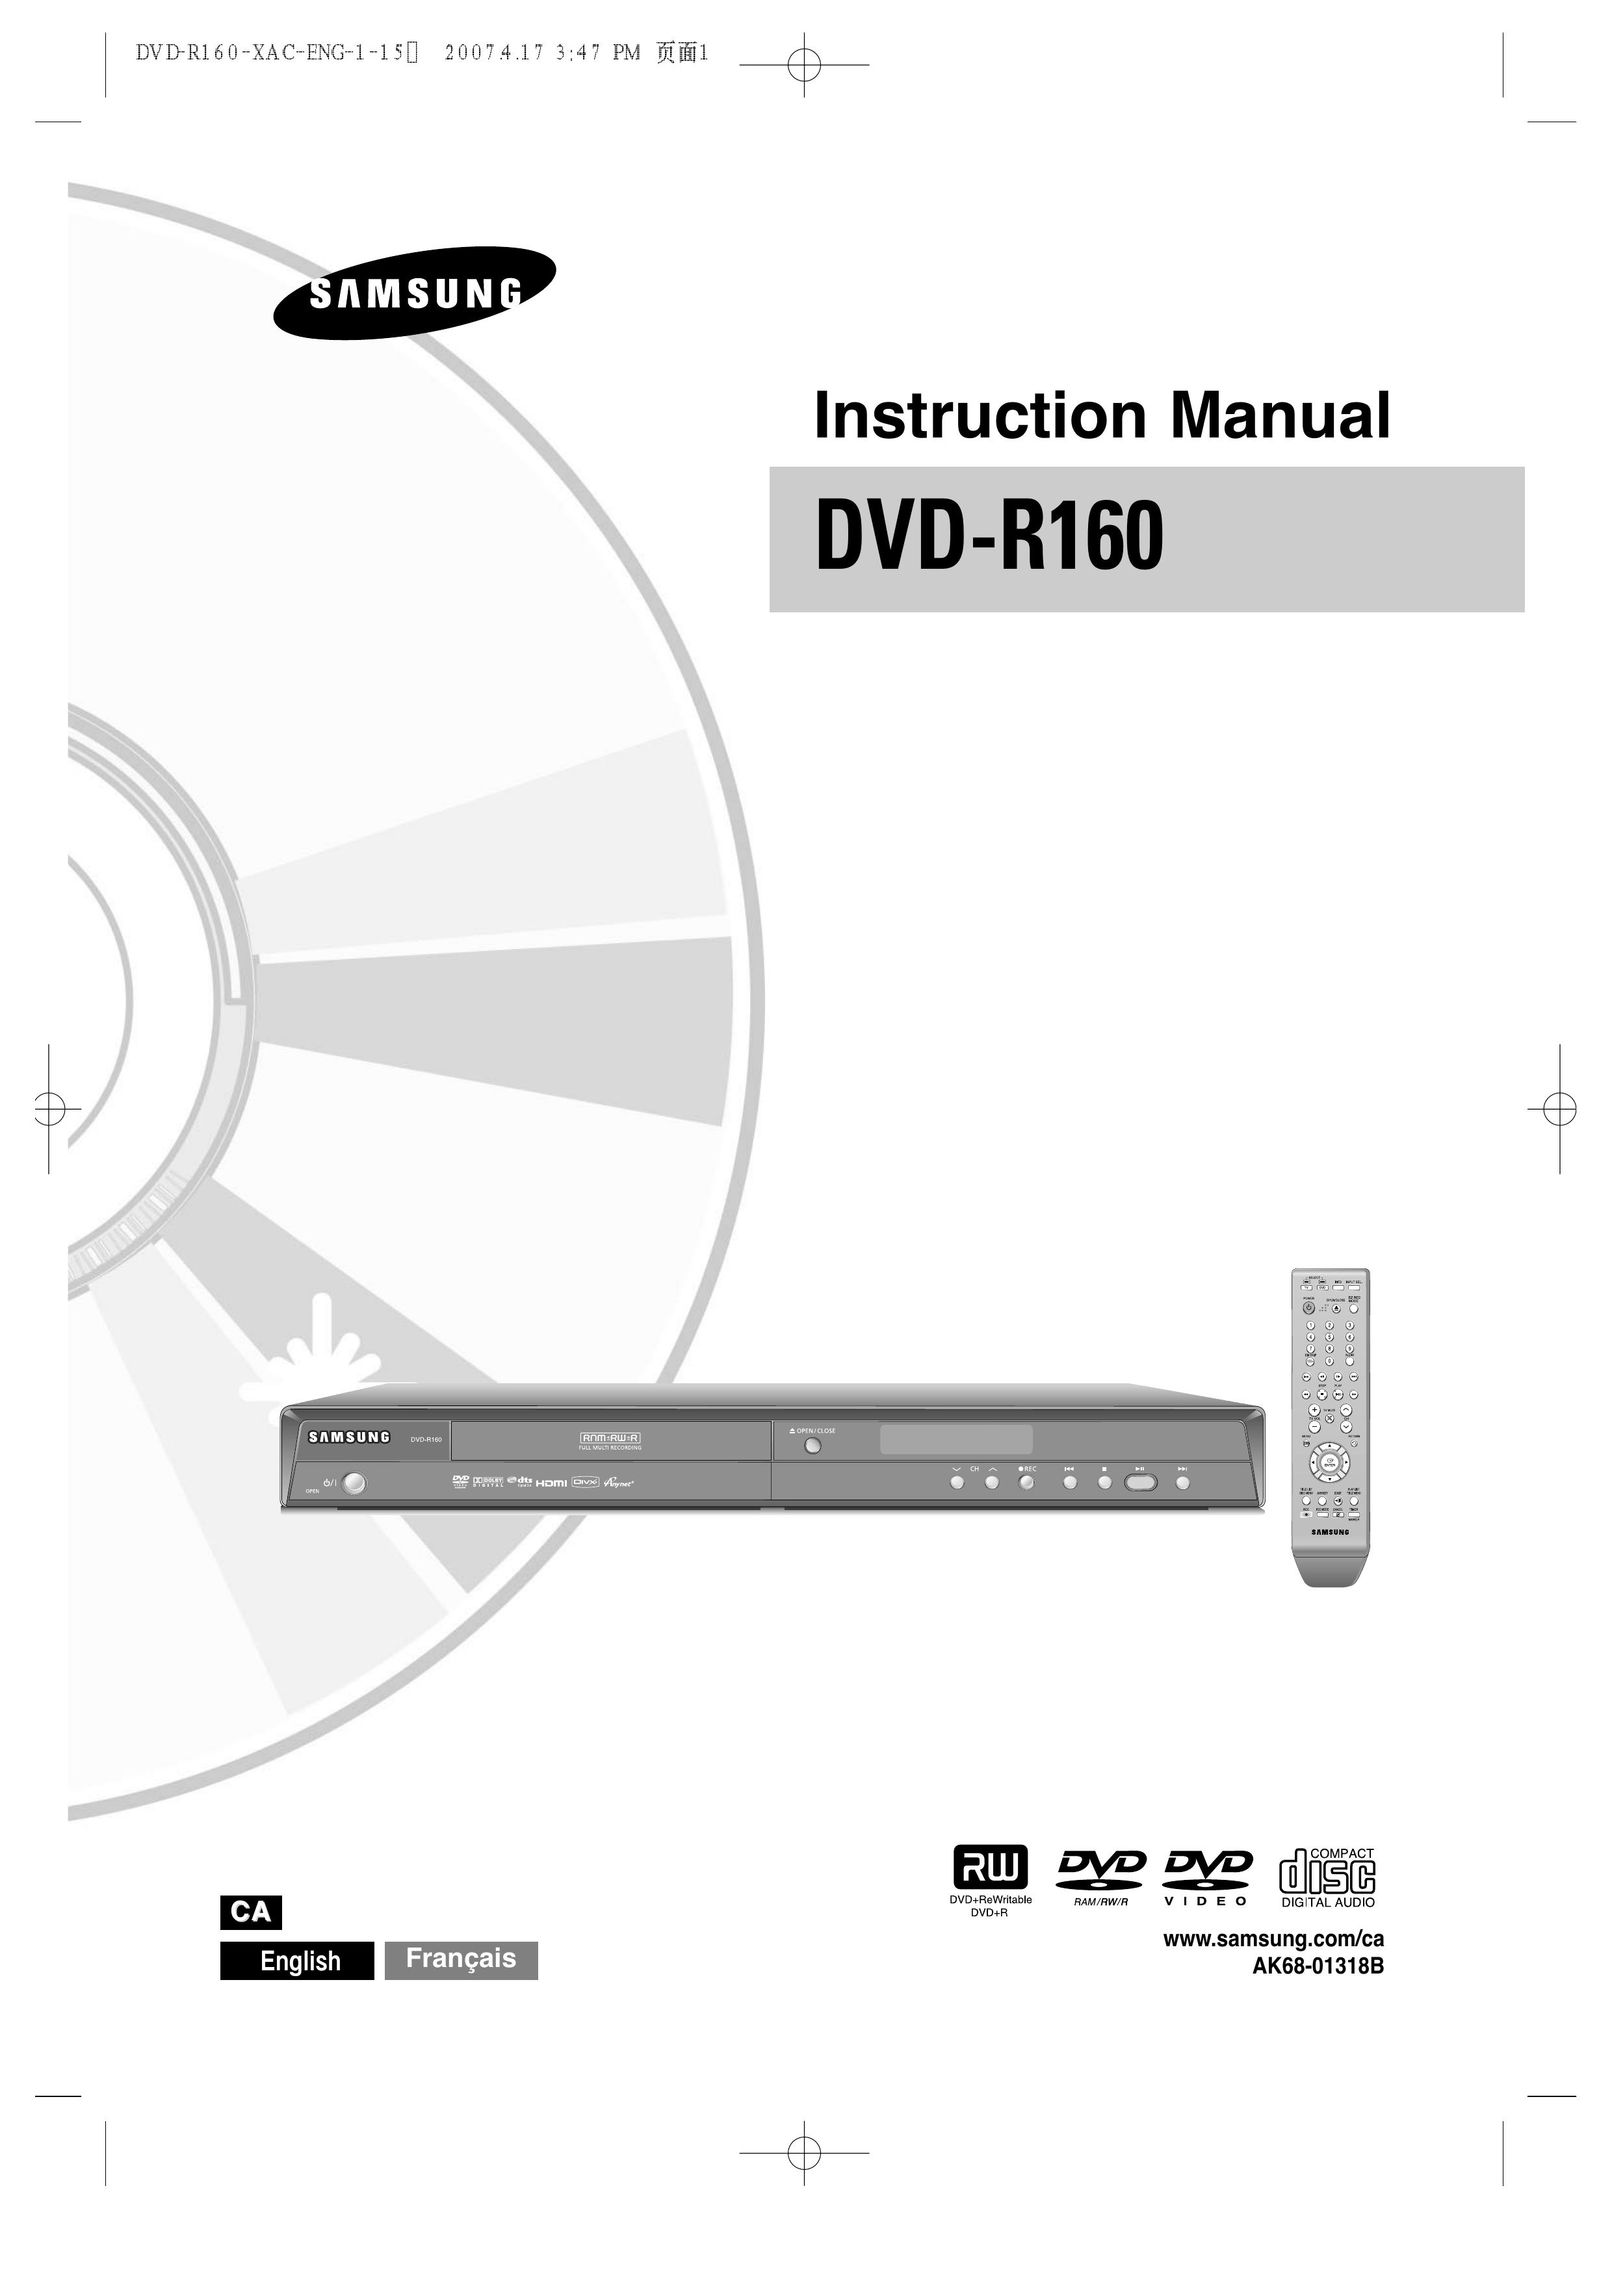 Samsung 20070529160005000 DVD Recorder User Manual